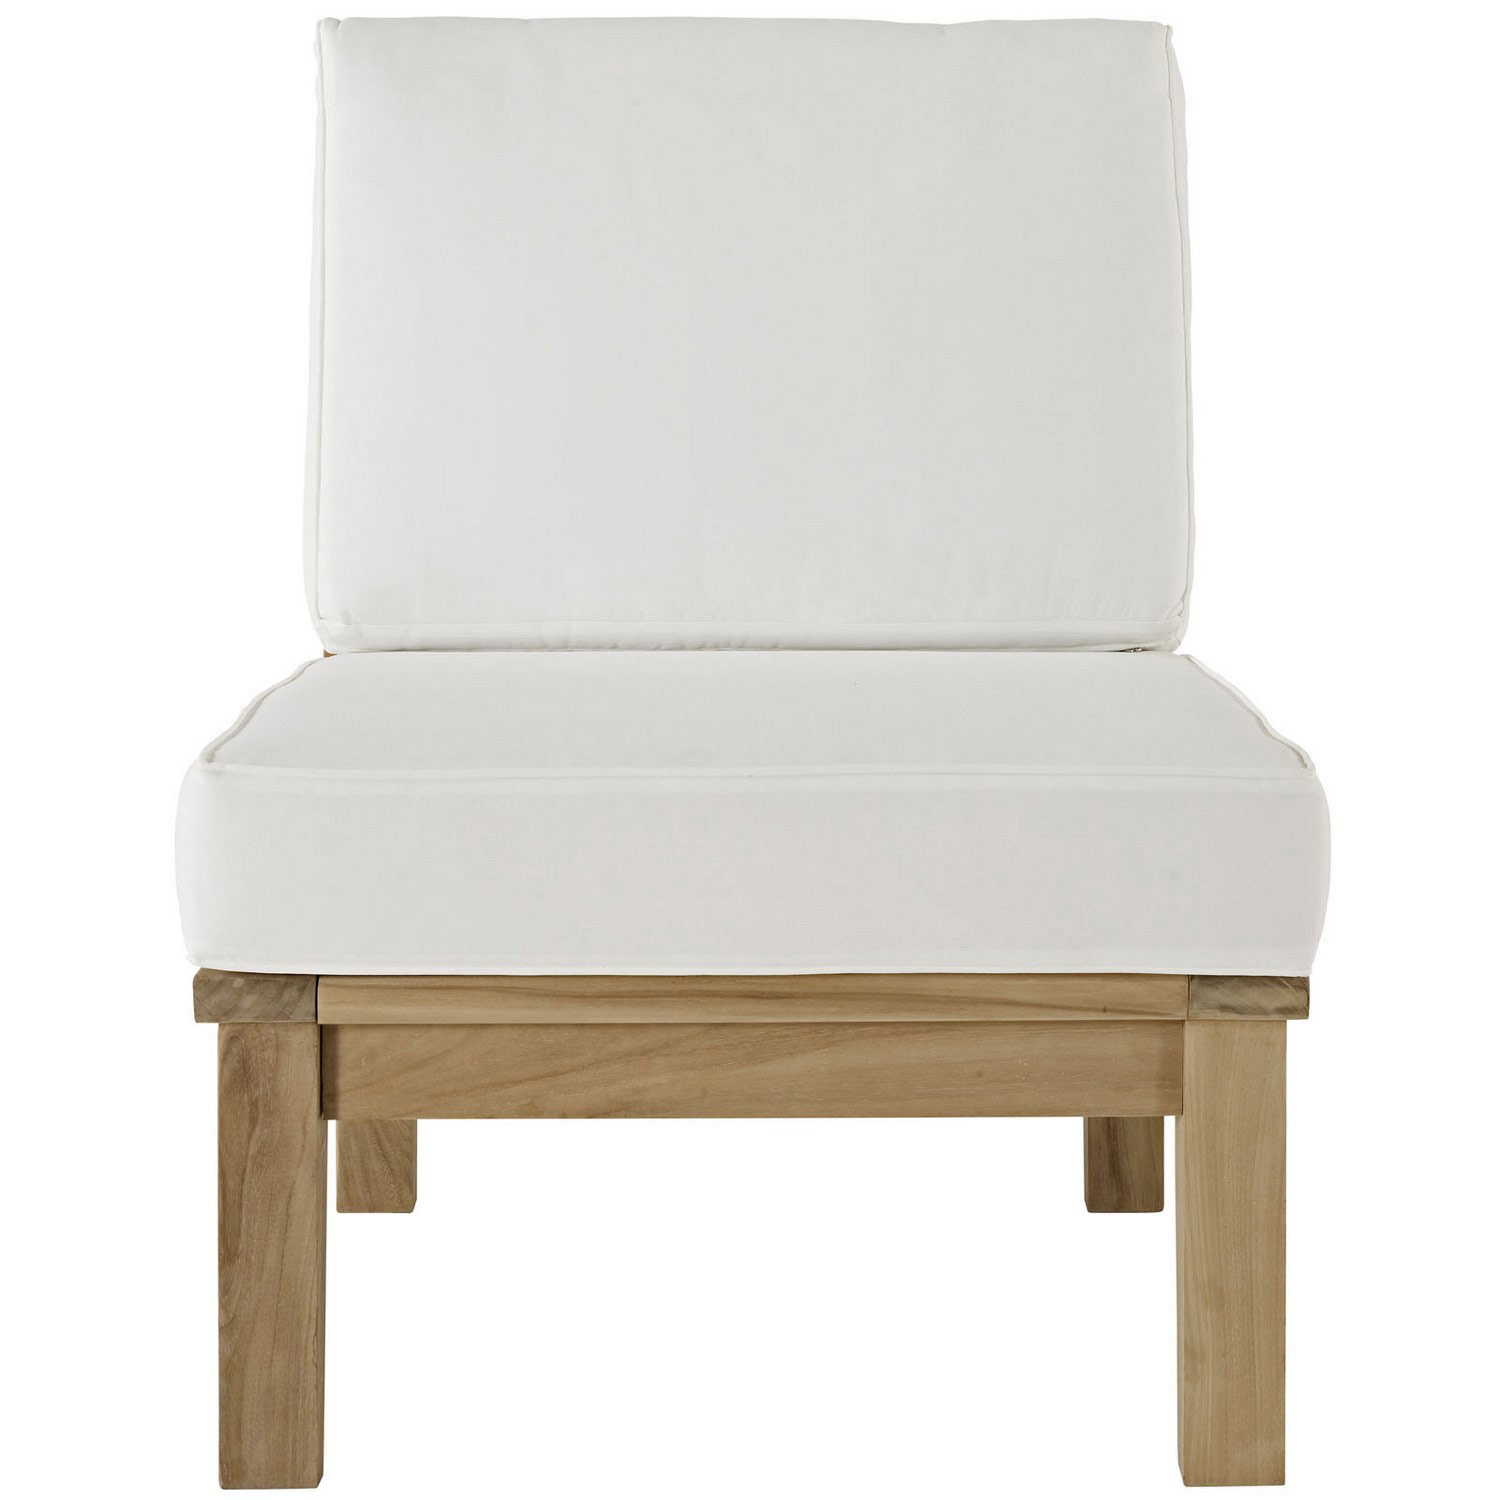 Modway Marina Armless Outdoor Patio Teak Sofa - Natural White